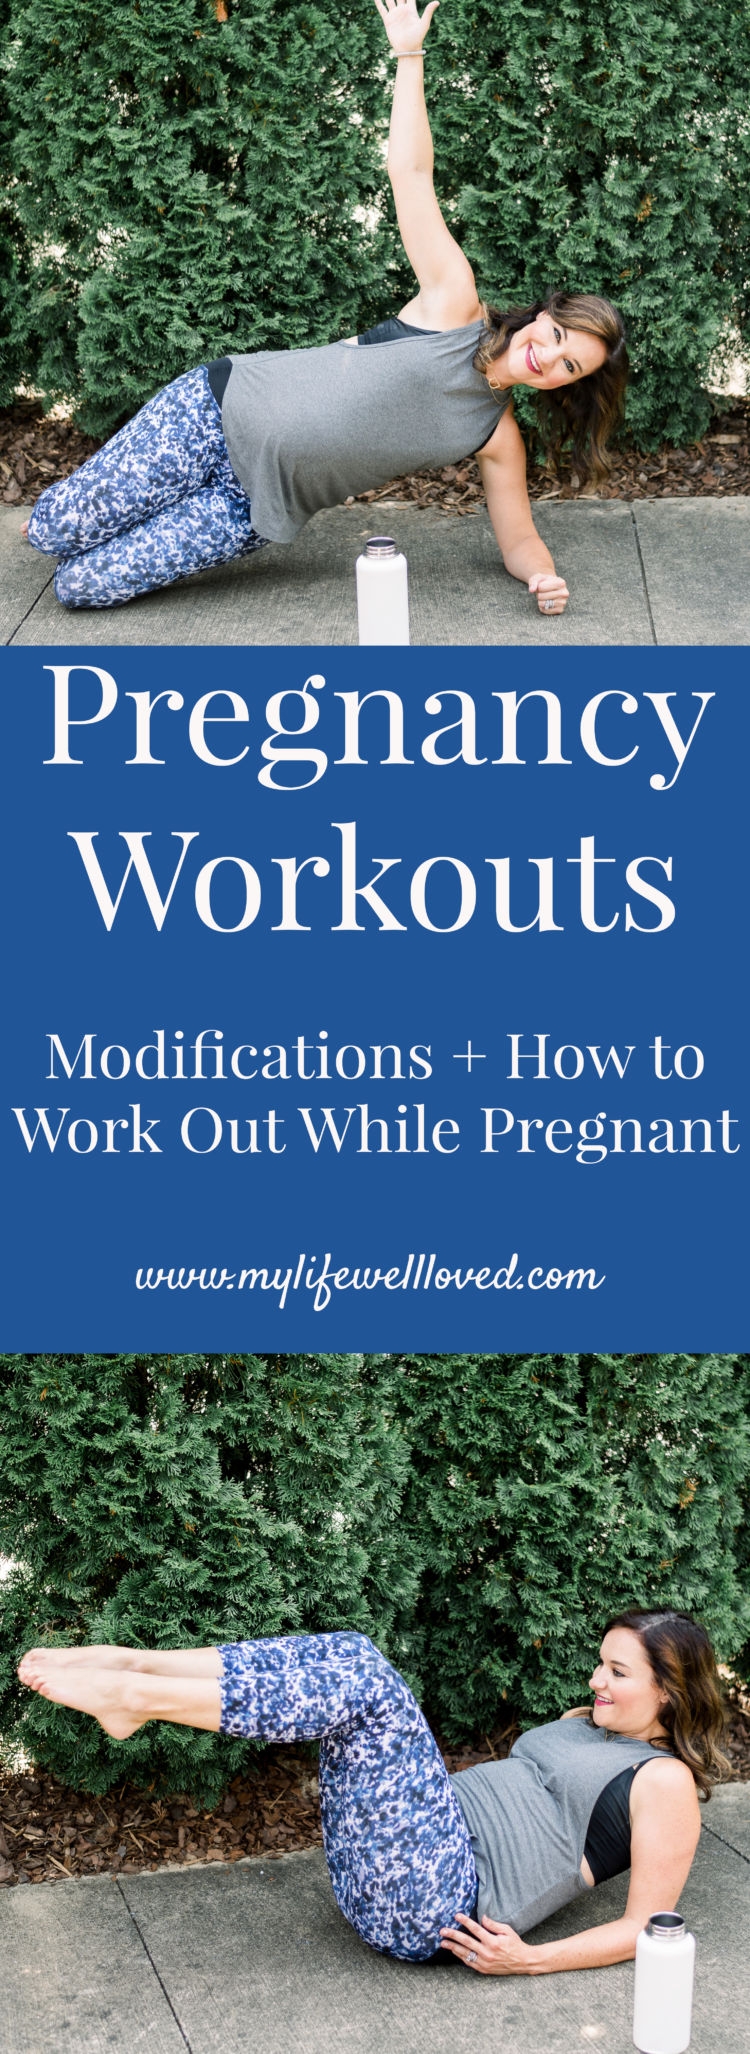 pregnancy workout modifications